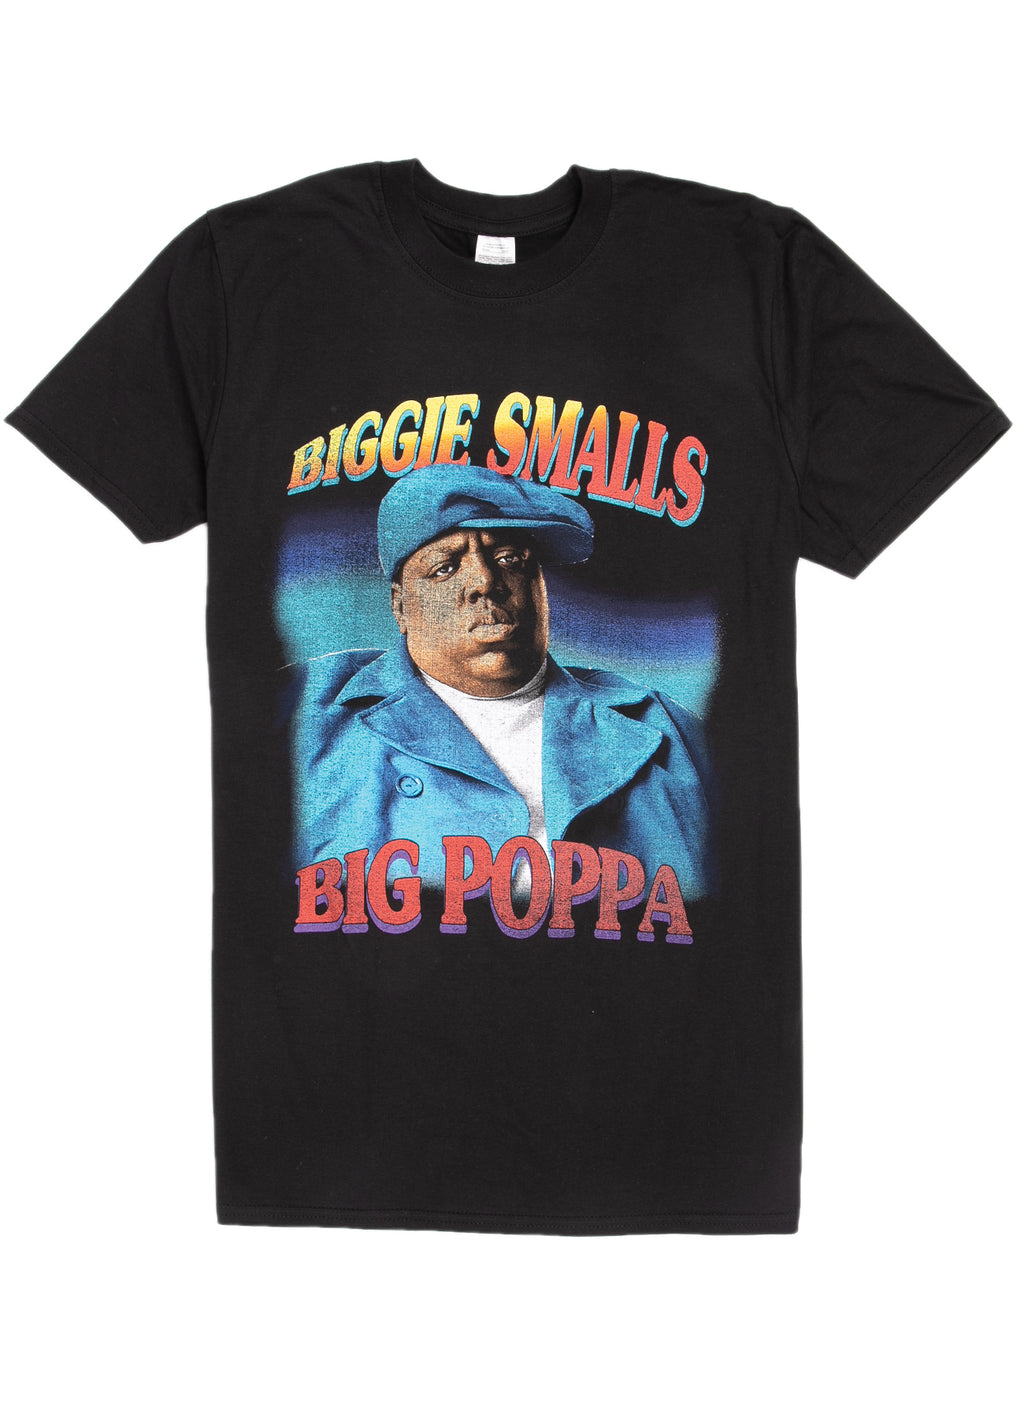 Biggie Smalls Big Poppa t-shirt.